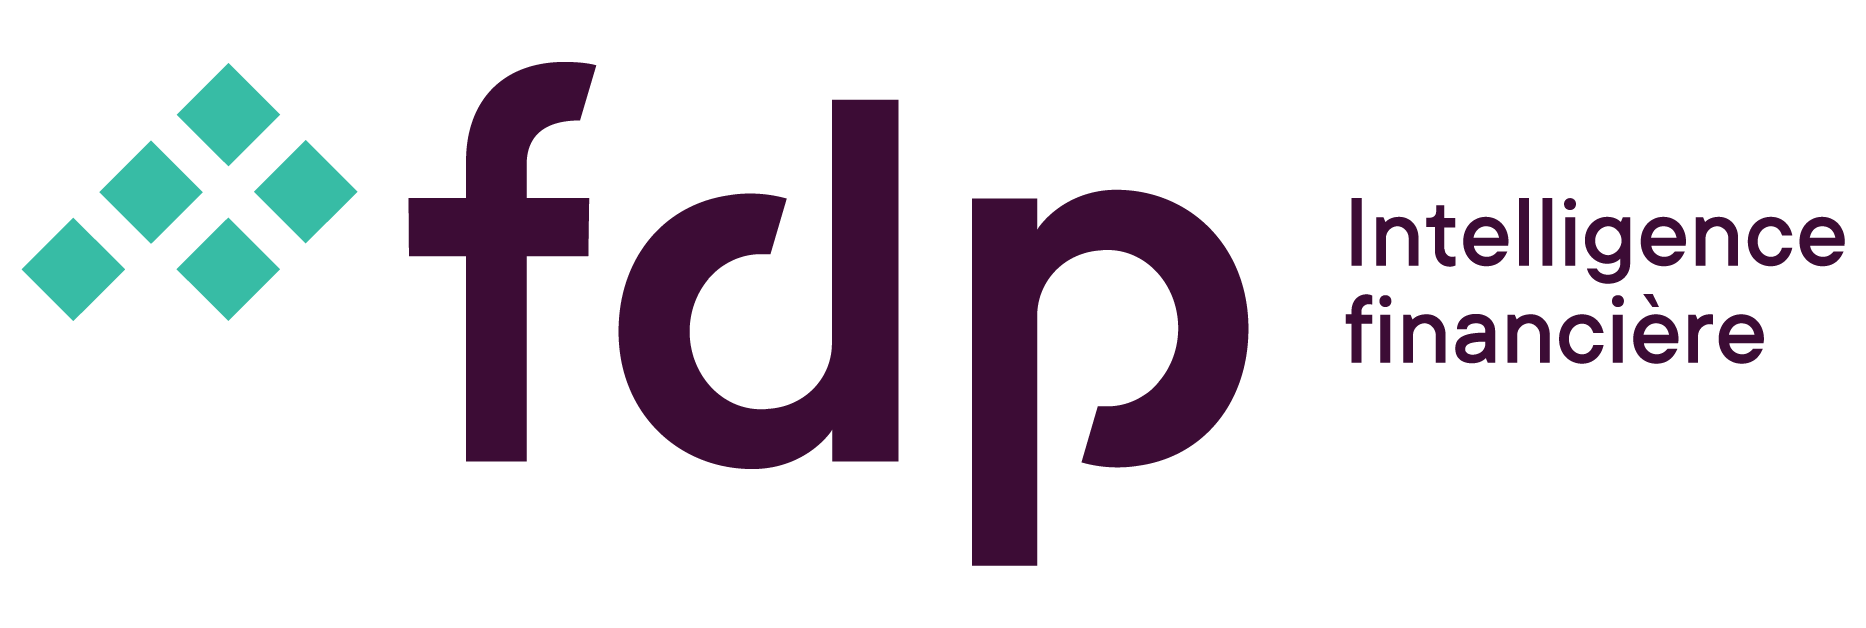 fdp-logo-2